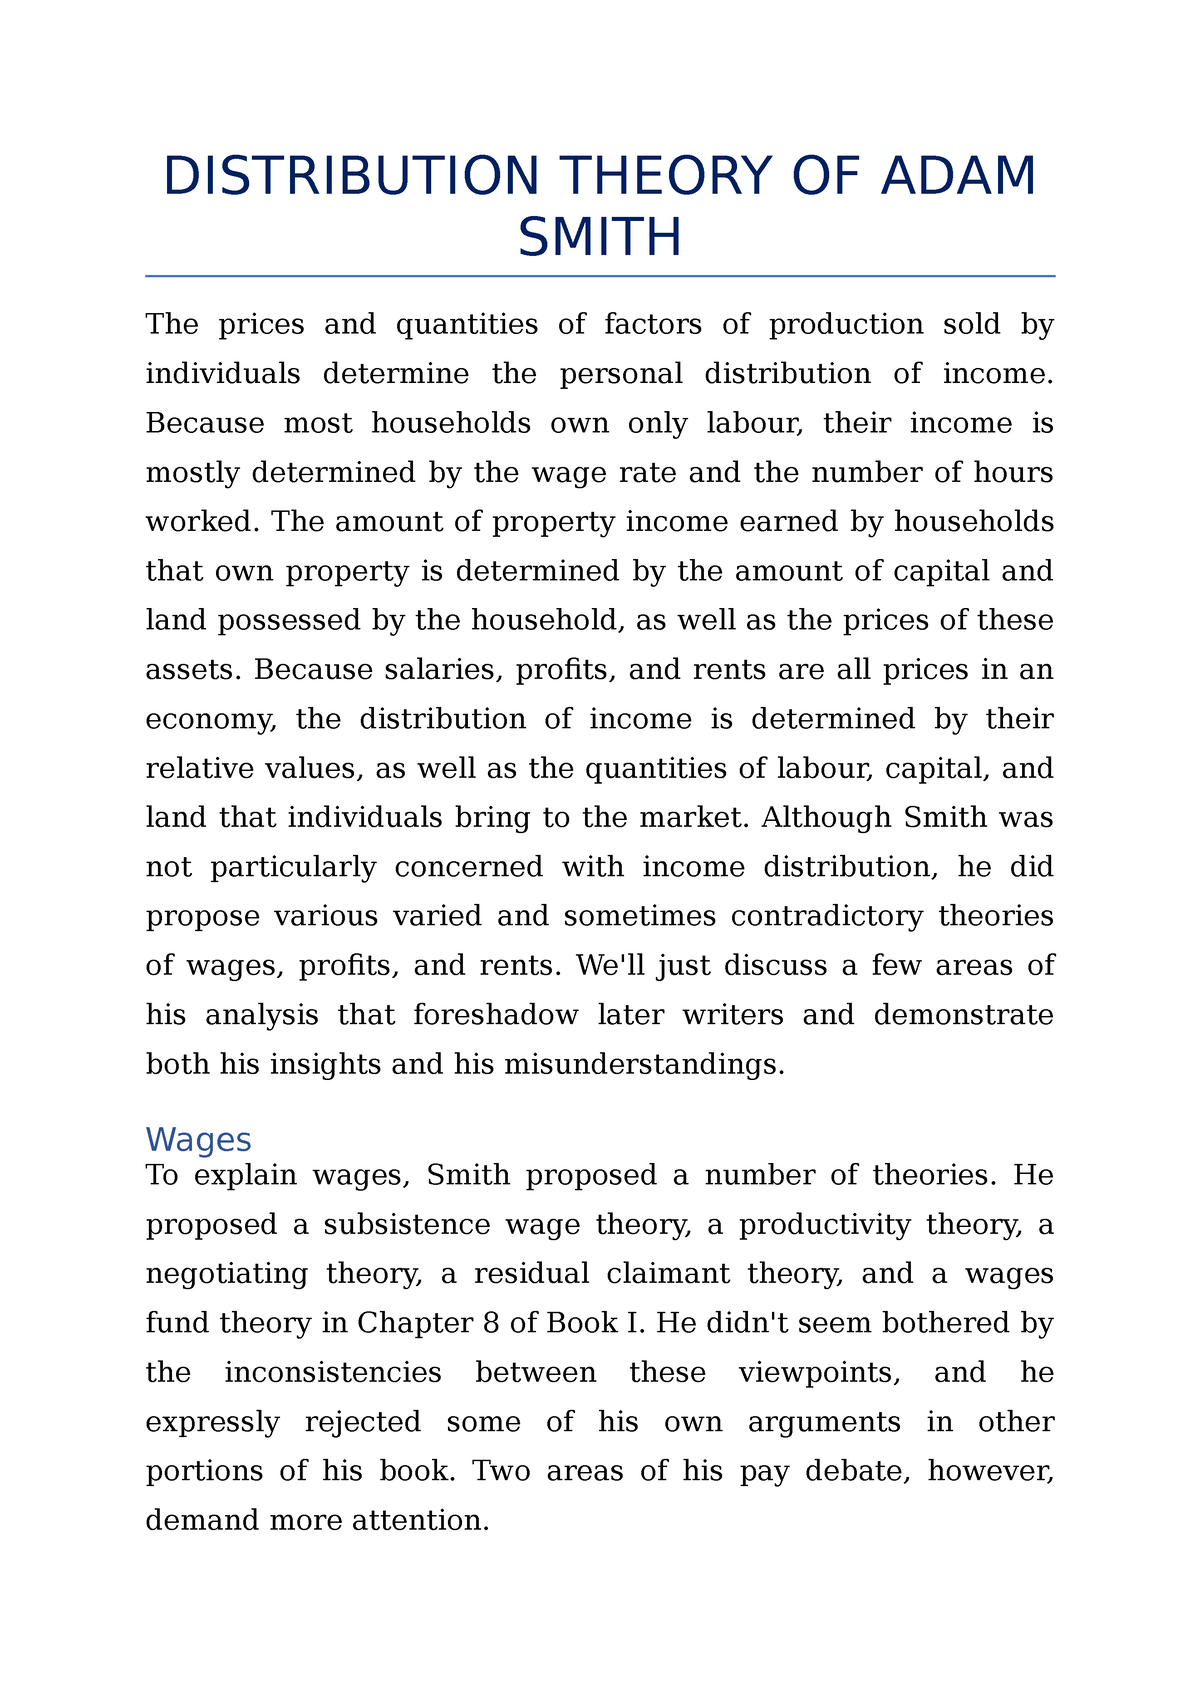 wage fund theory by adam smith